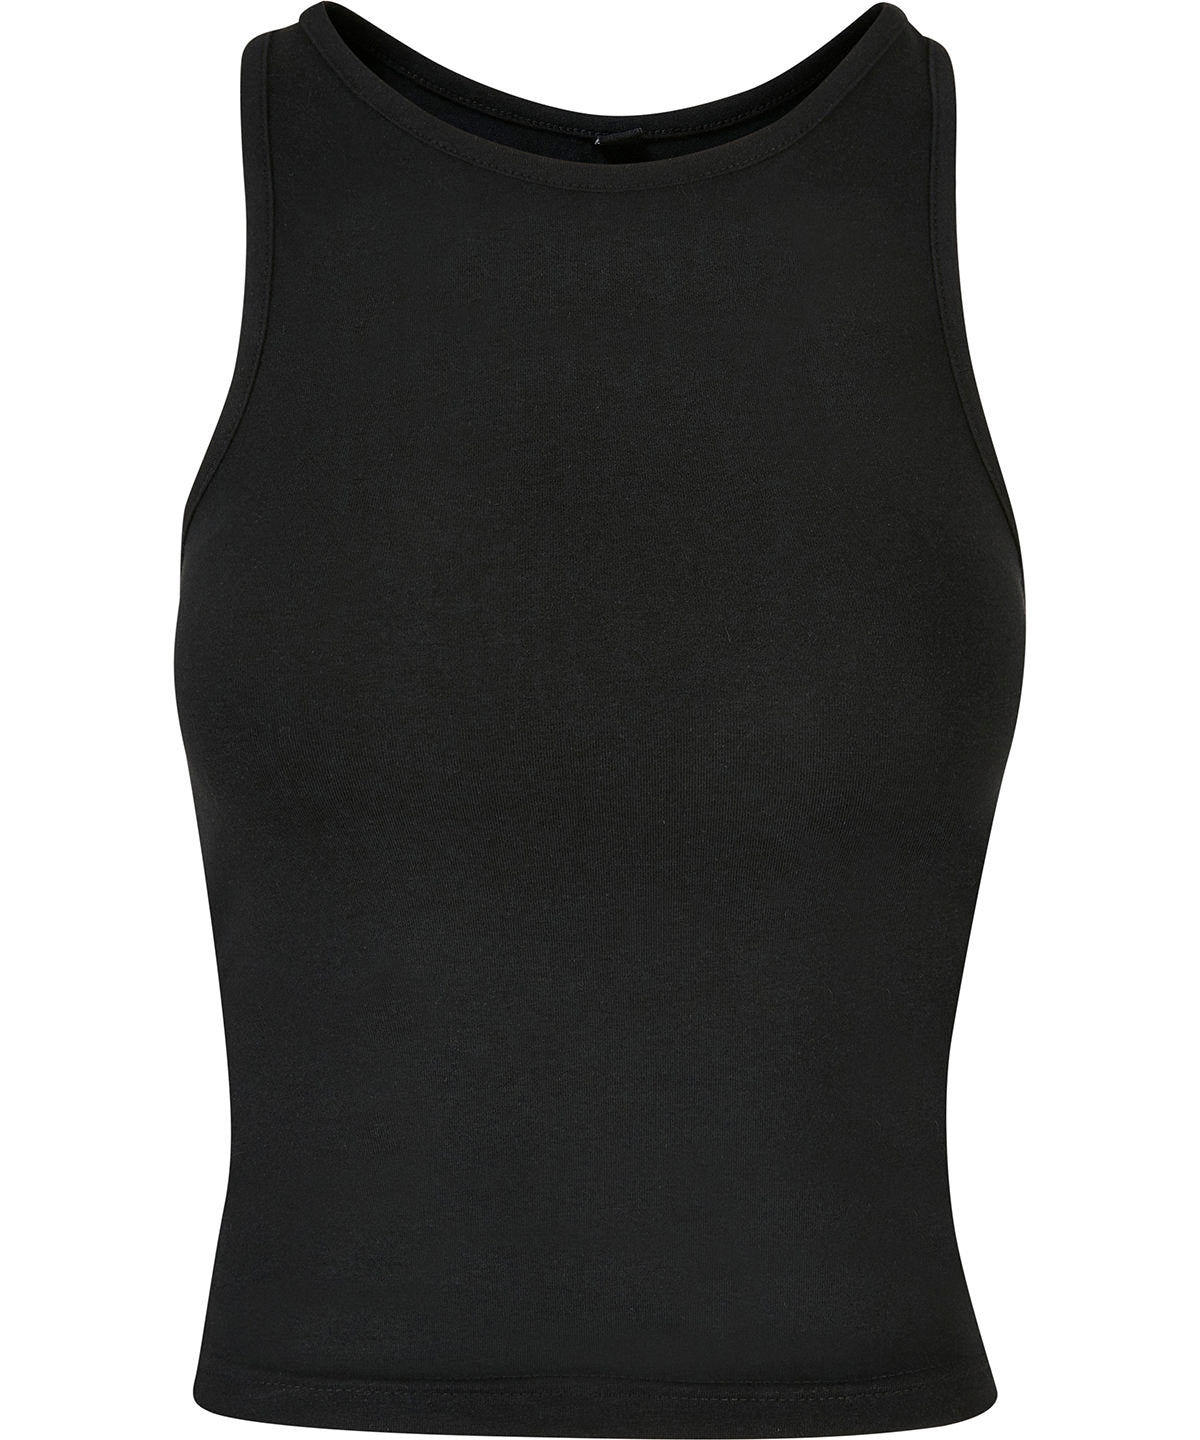 Personalised Vests - Black Build Your Brand Women’s racerback top